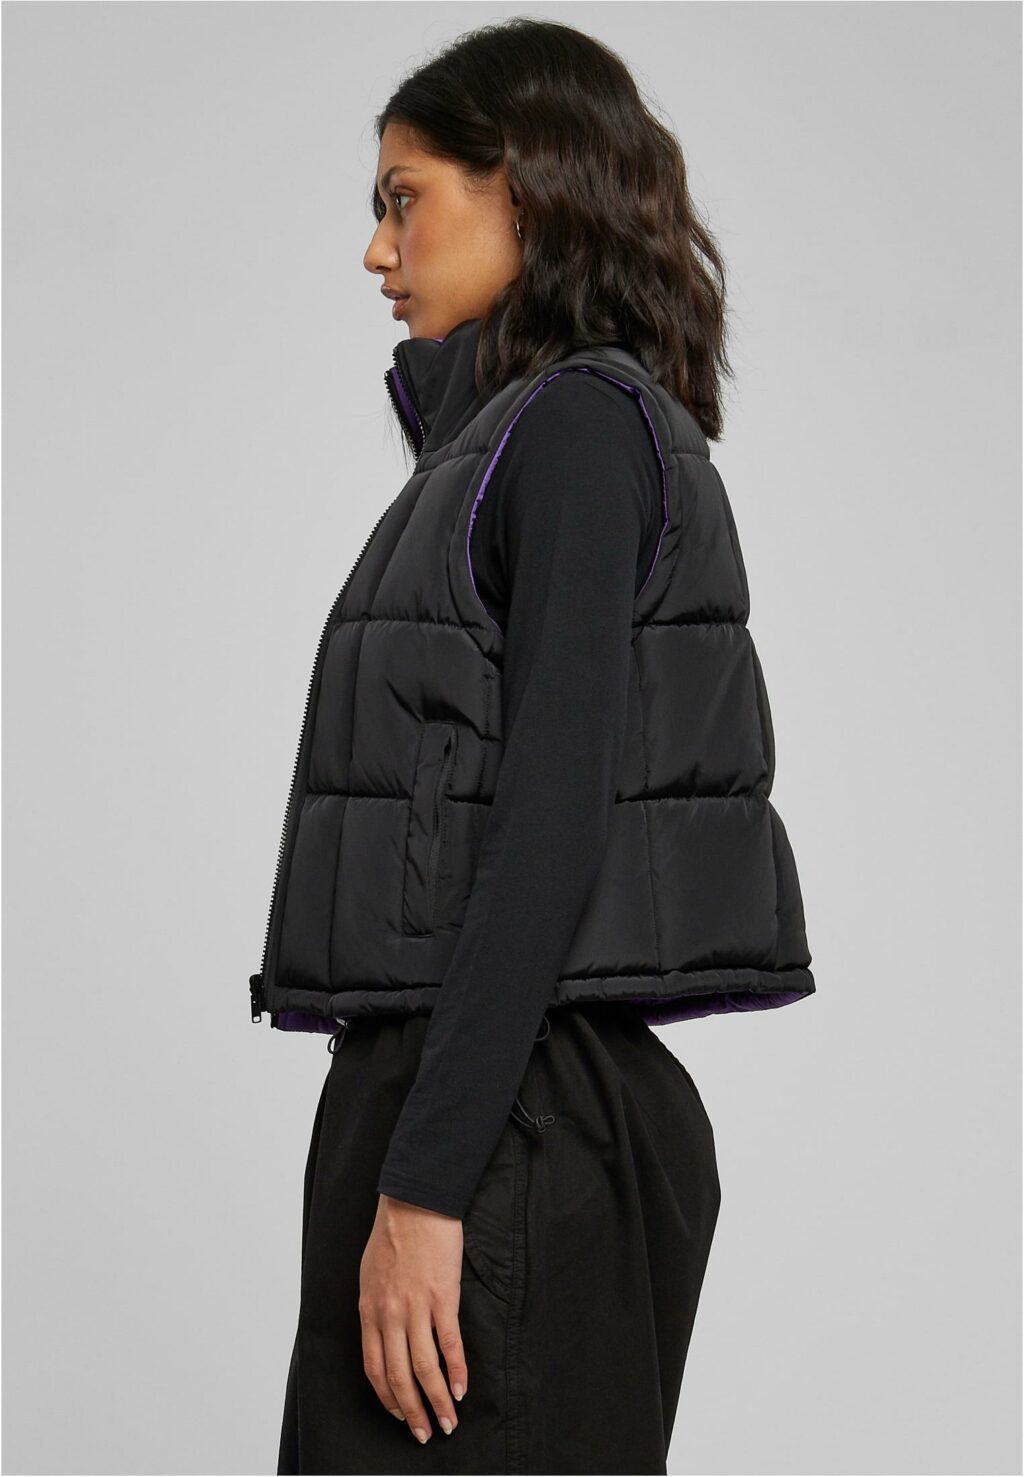 Urban Classics Ladies Reversible Cropped Puffer Vest black/realviolet TB6069